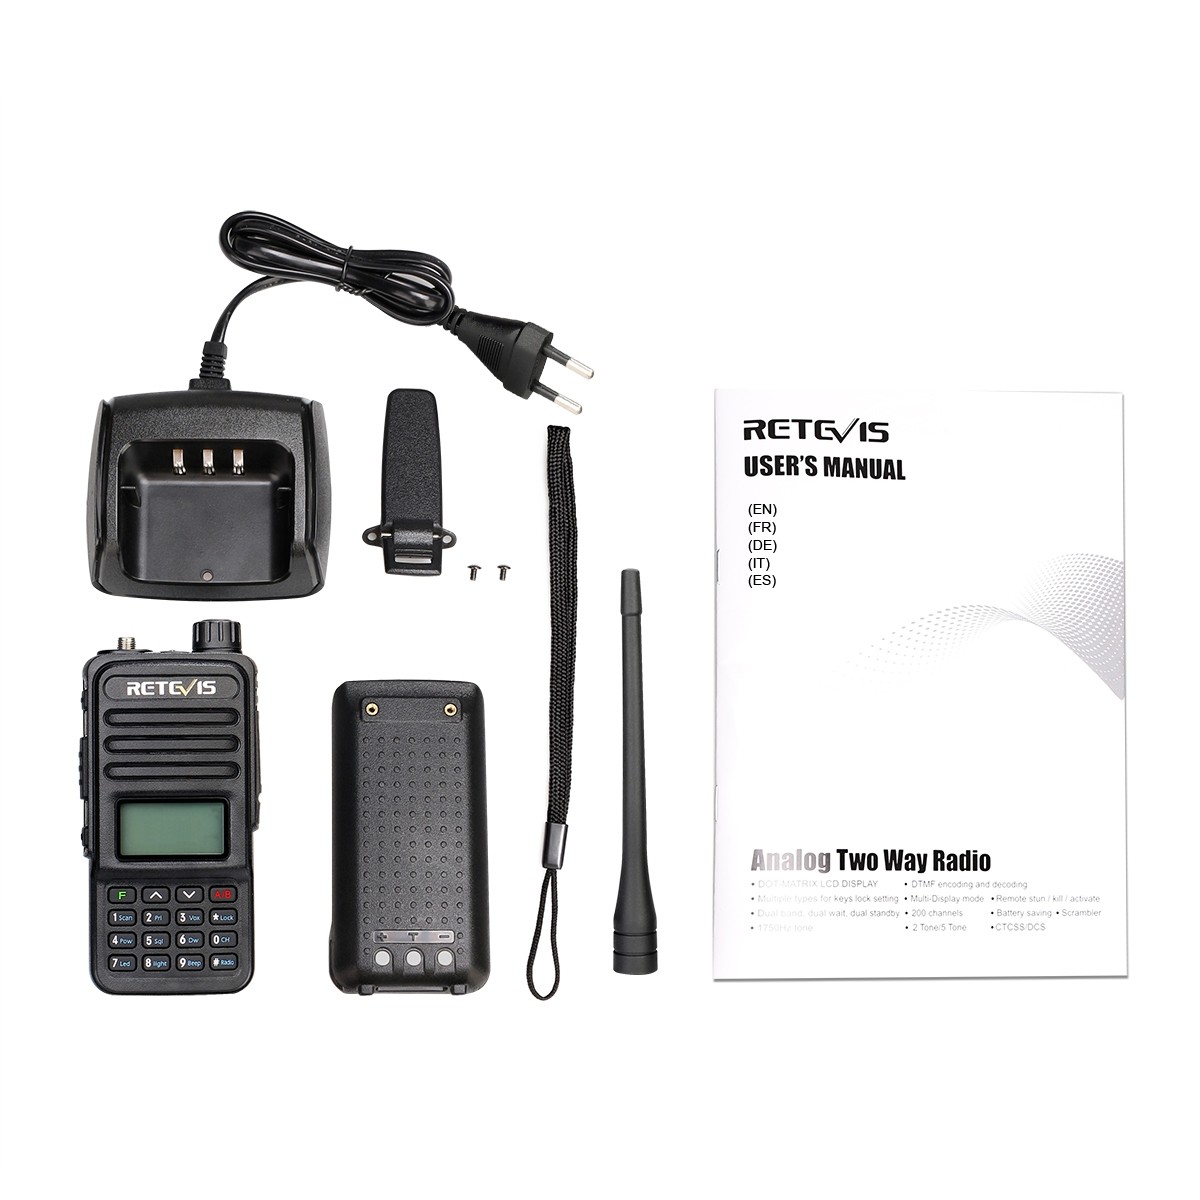 RETEVIS RT85 EU Frequency 136.000-174.000MHz+400.000-470.000MHz 200CHS Dual Band Digital Two Way Radio Handheld Walkie Talkie (Black)